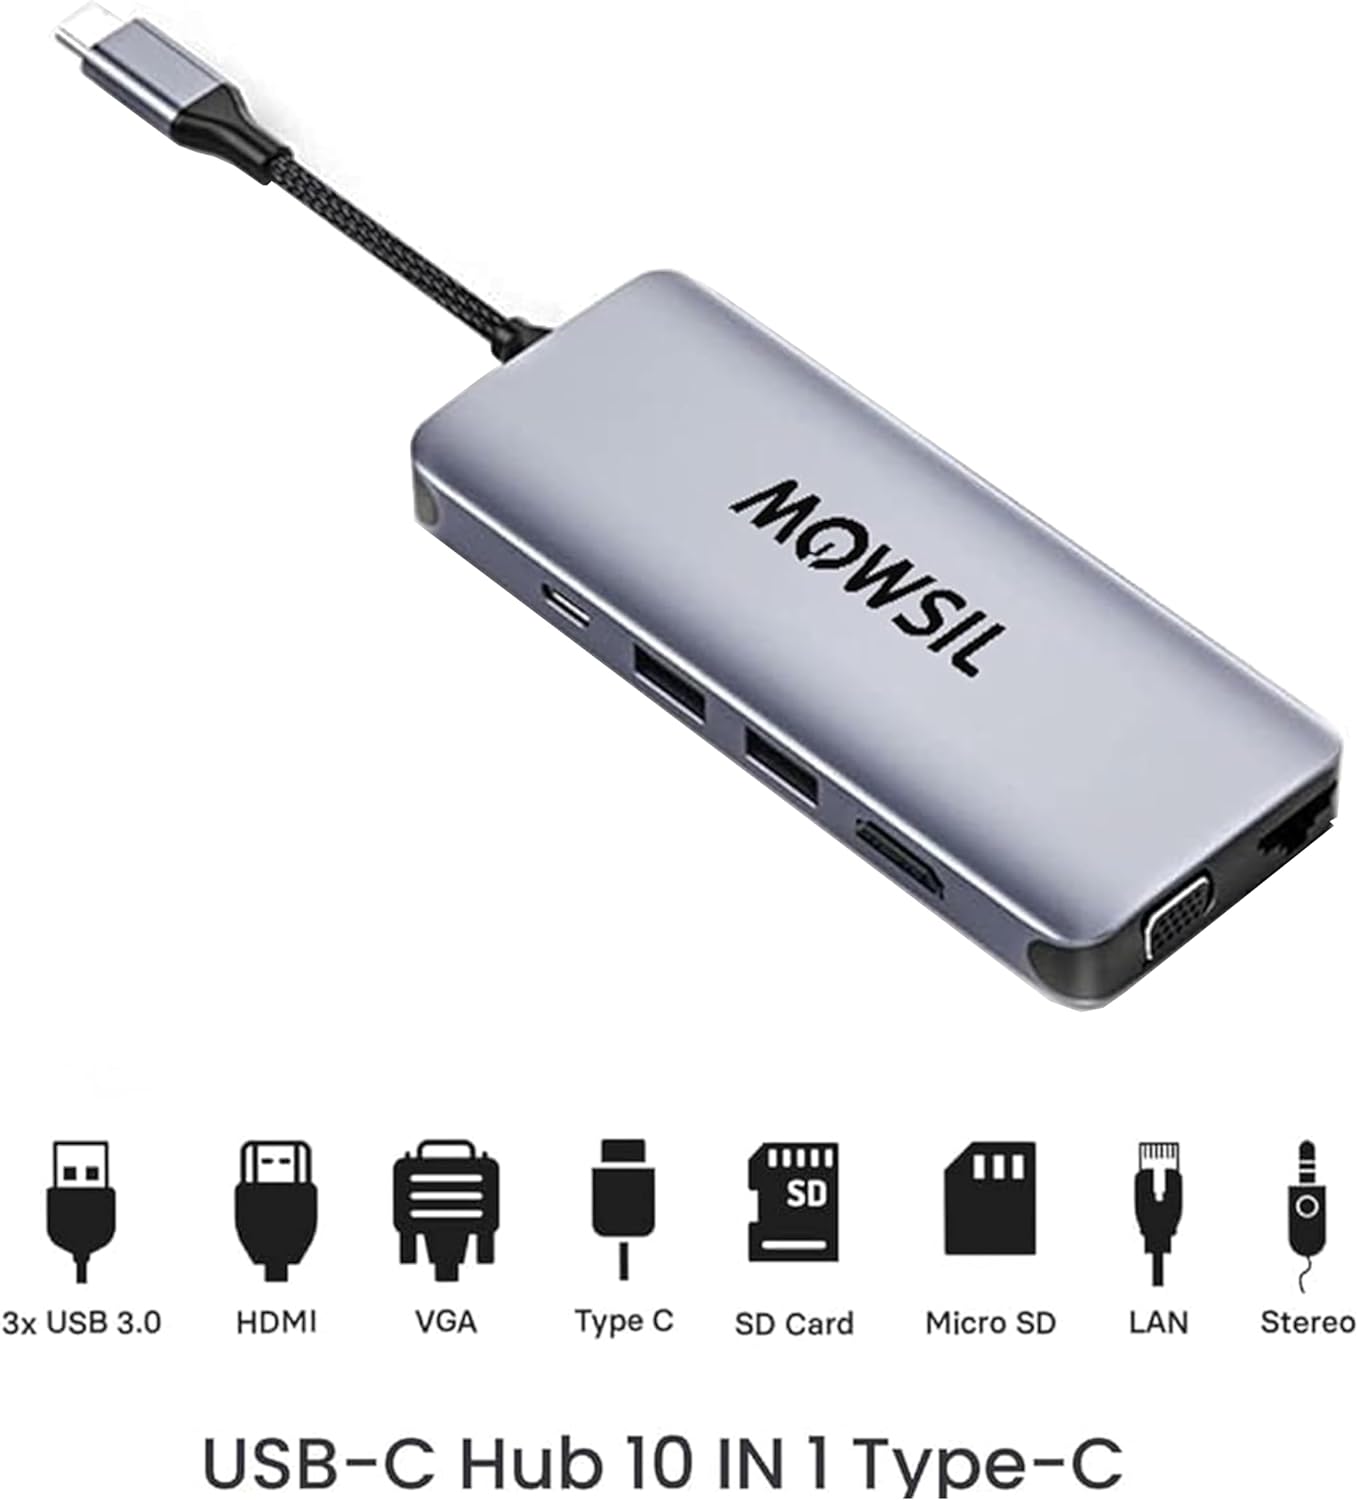 Mowsil_10_in_1_USB_C_Hub_4K_HDMI_and_FHD_VGA_Dual_Video_Output_Type_C_Hub-3.jpg